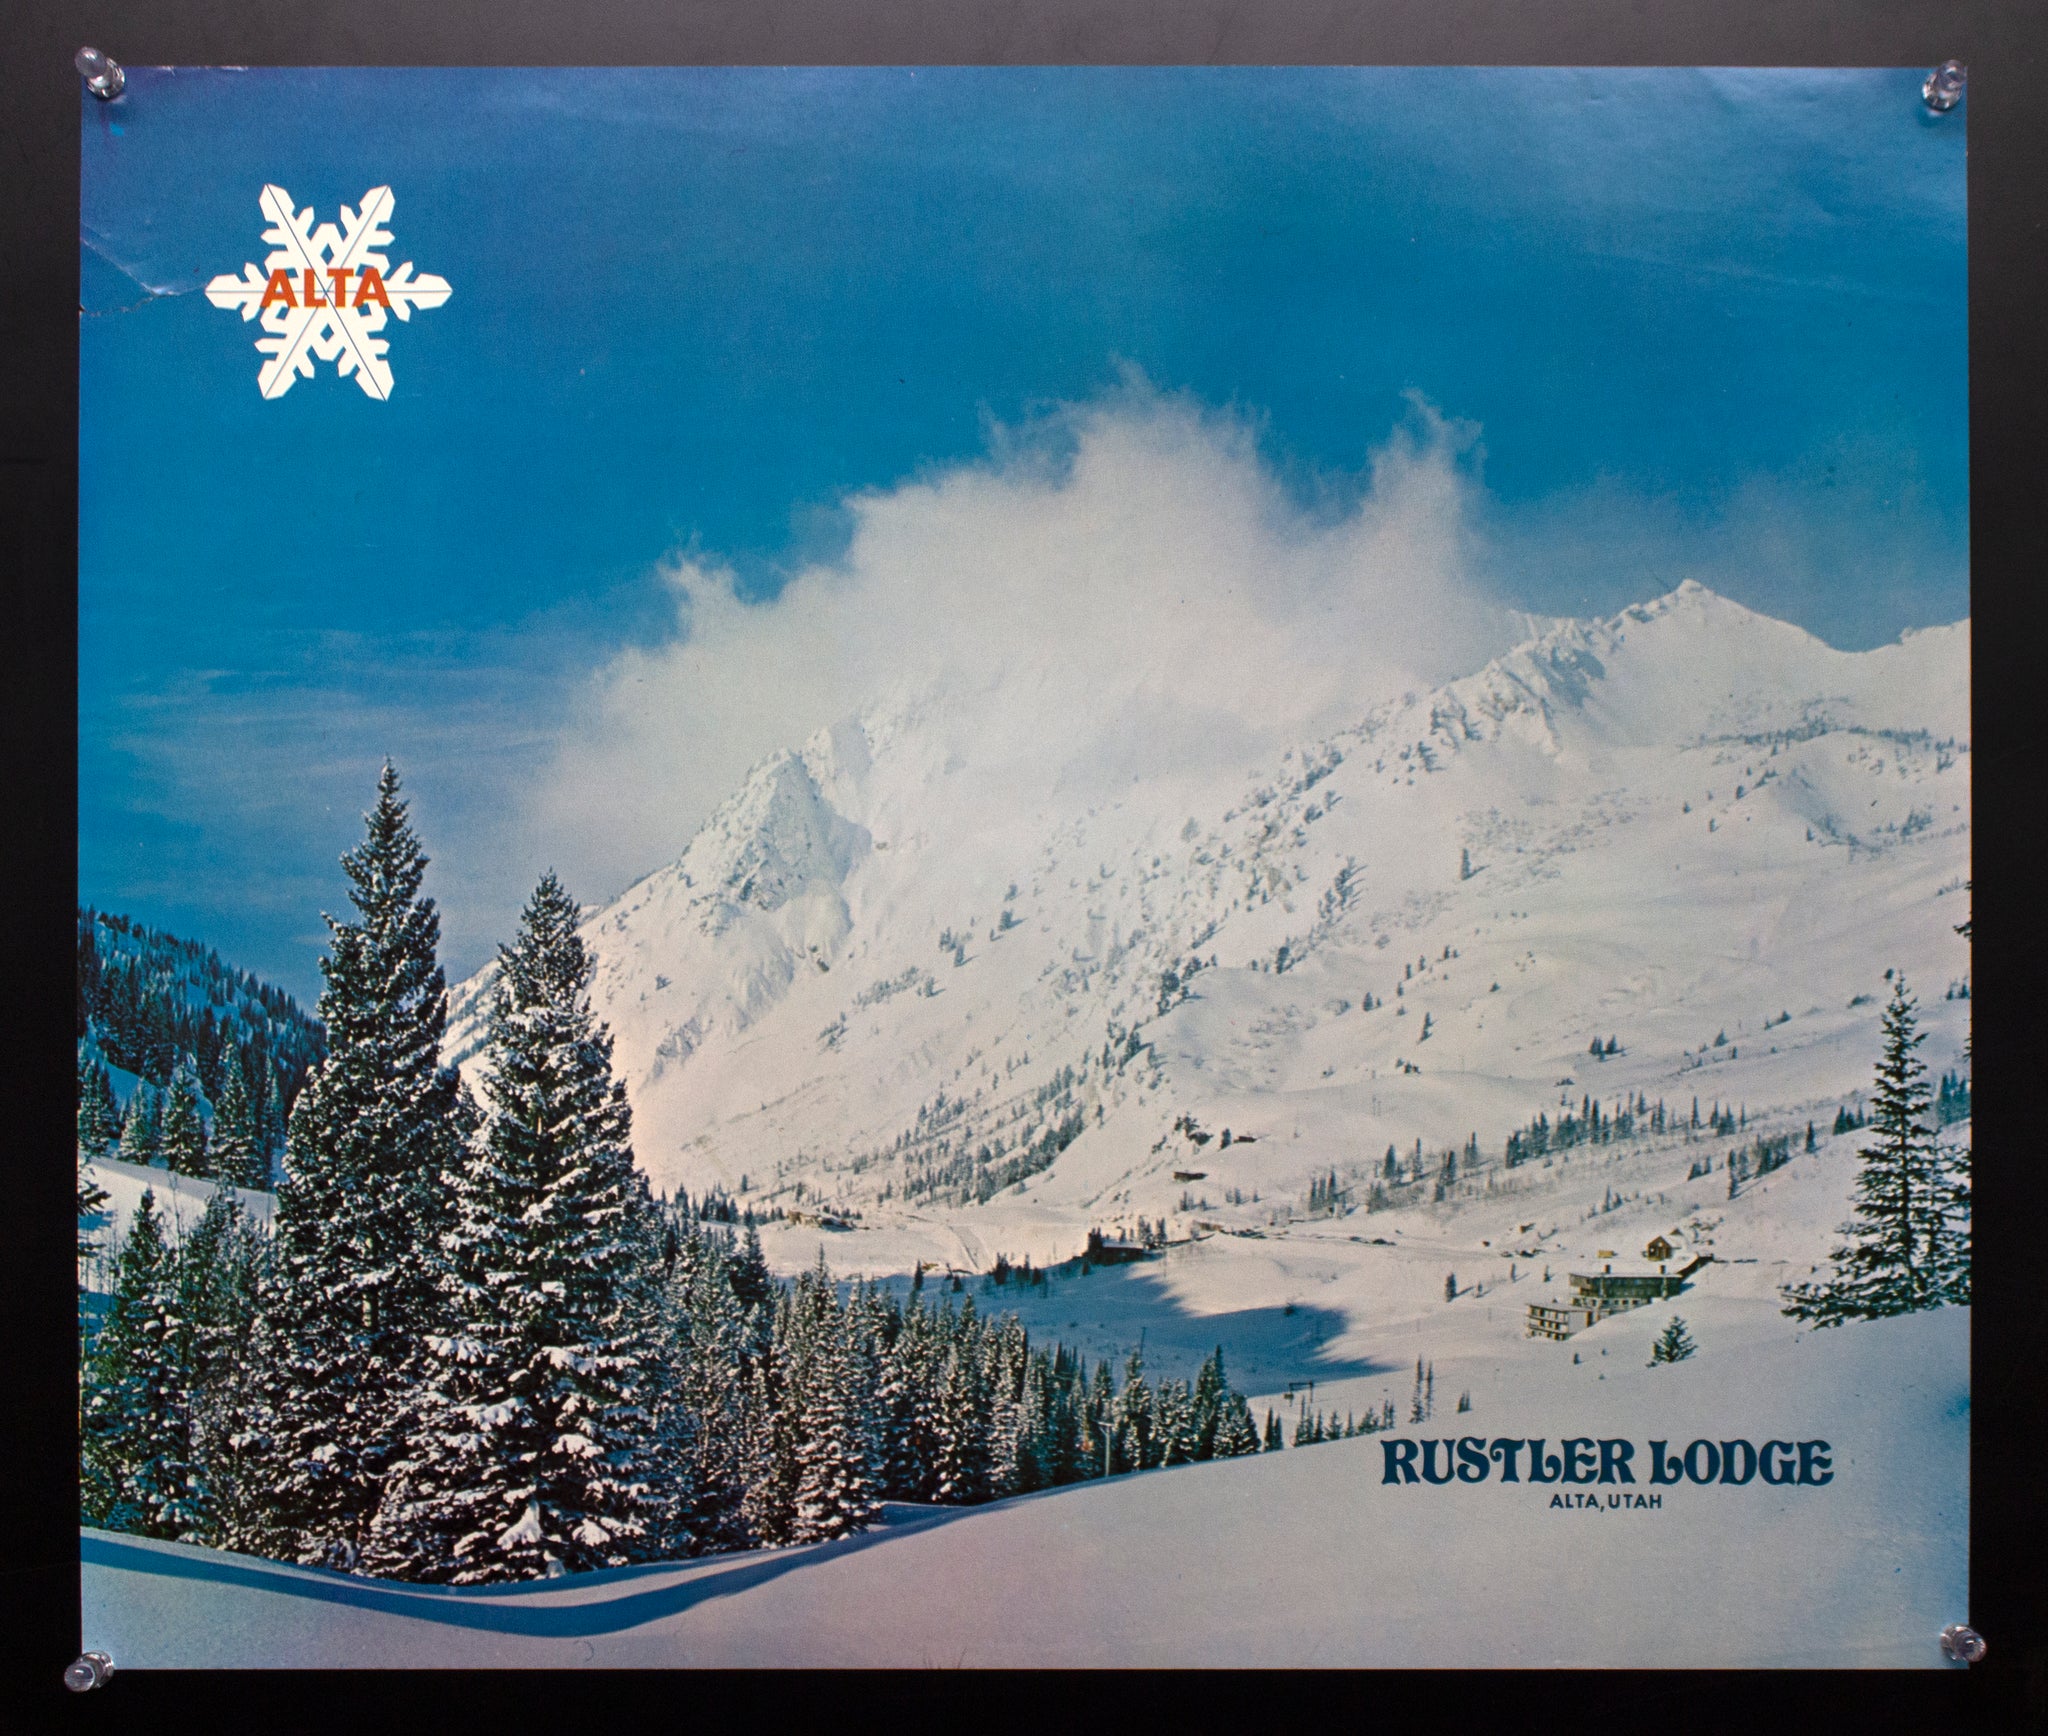 c.1974 Rustler Lodge Alta Utah Ski Skiing Tourism